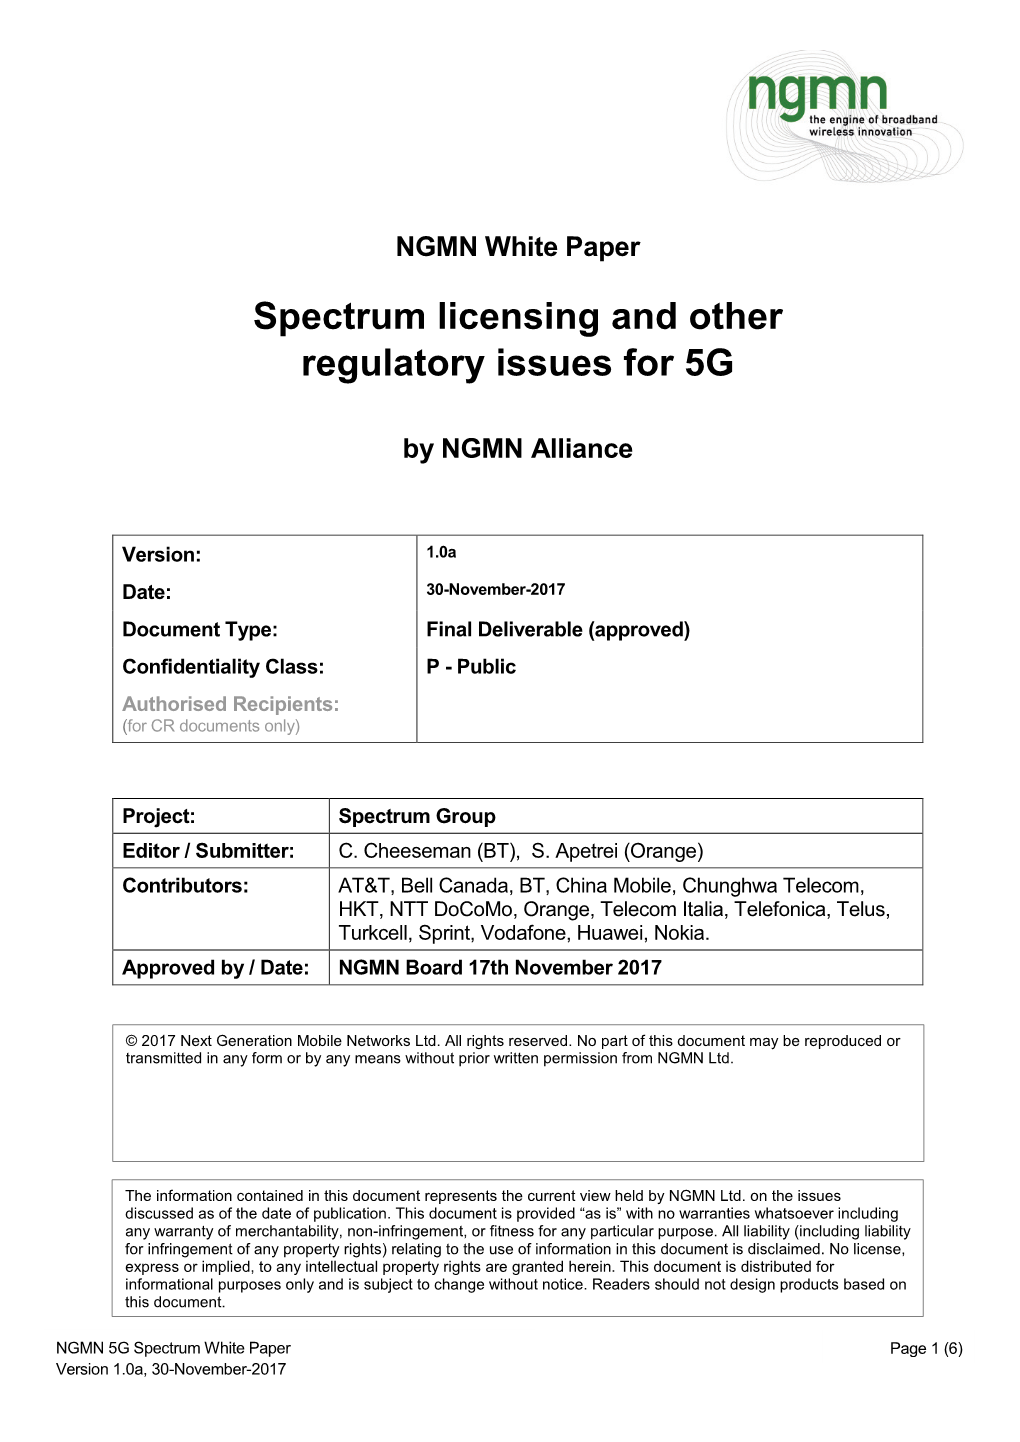 NGMN 5G Spectrum White Paper Page 1 (6) Version 1.0A, 30-November-2017